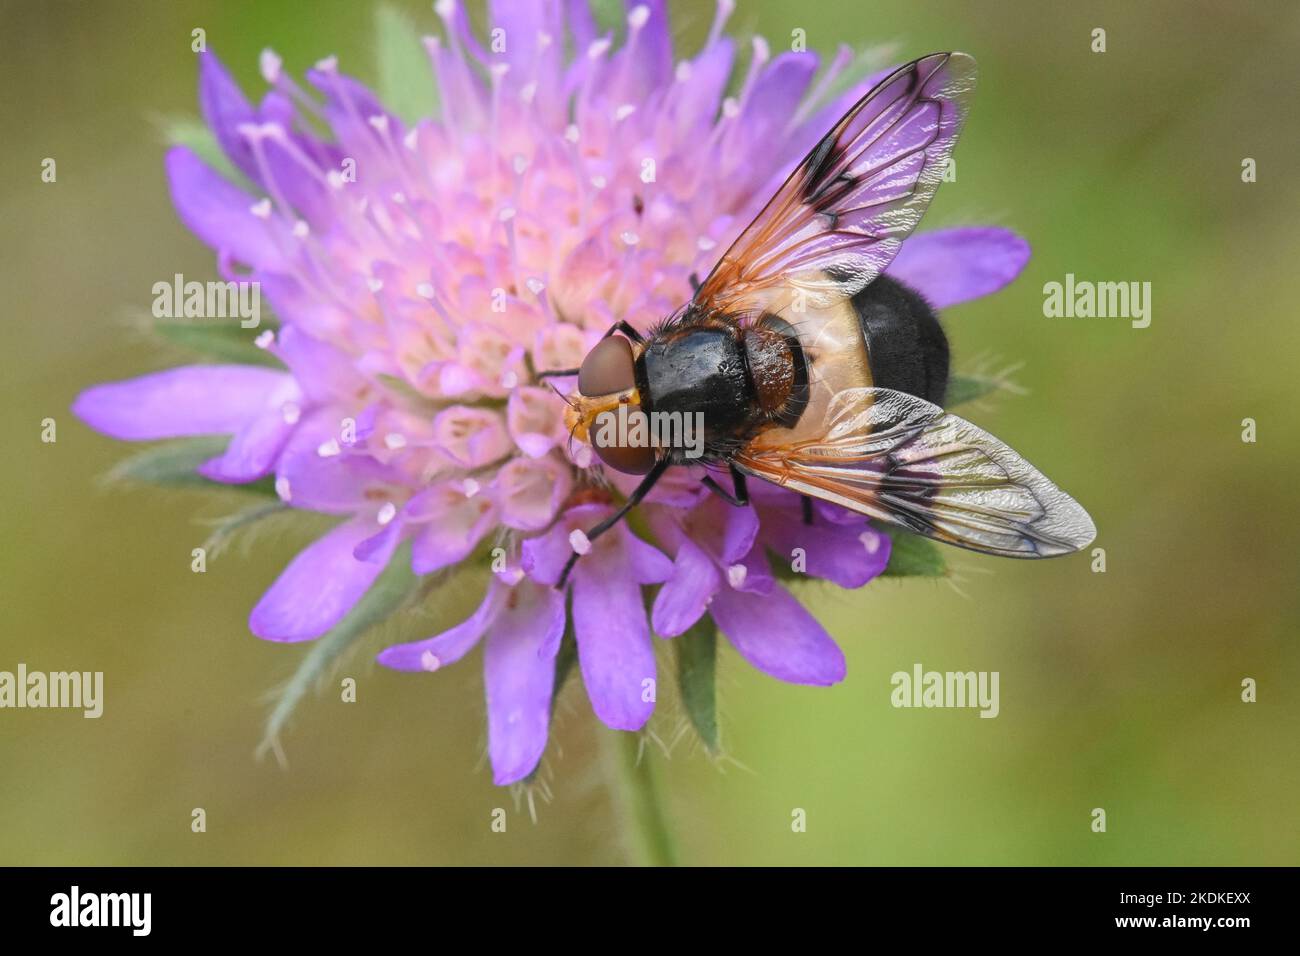 fly feeding on flower. Stock Photo